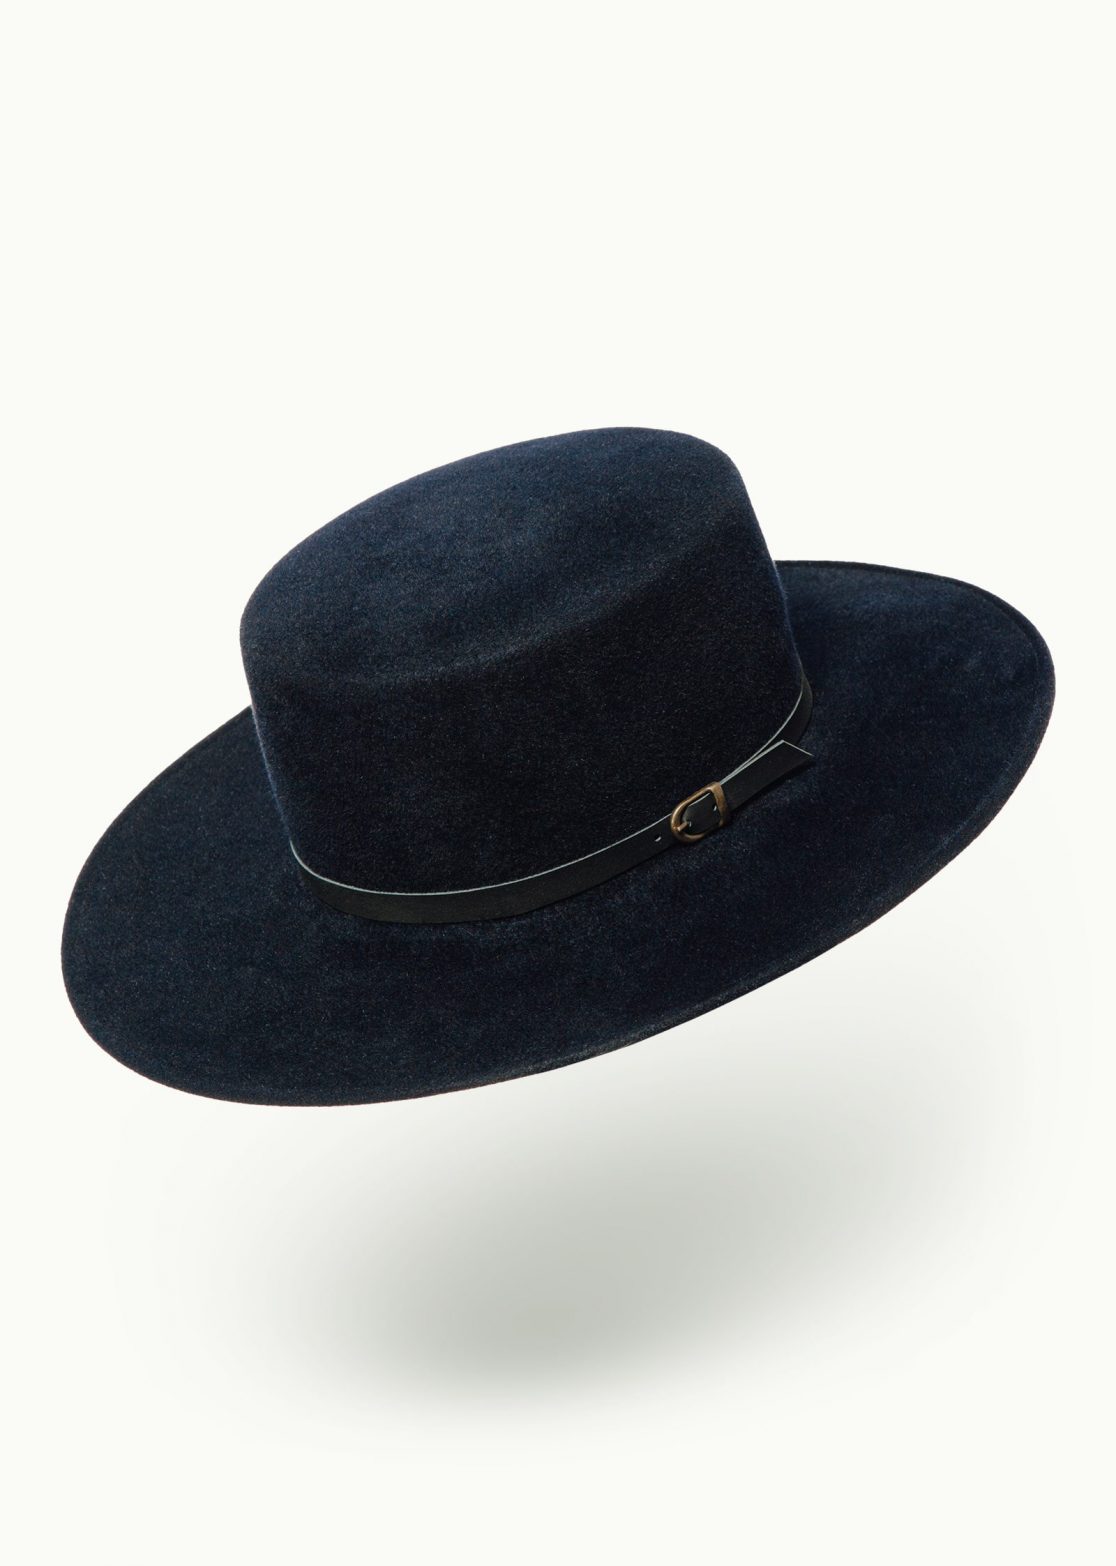 Hats - Women - Unisex - Men - Wide Spaniard Blue Midnight Image Primary